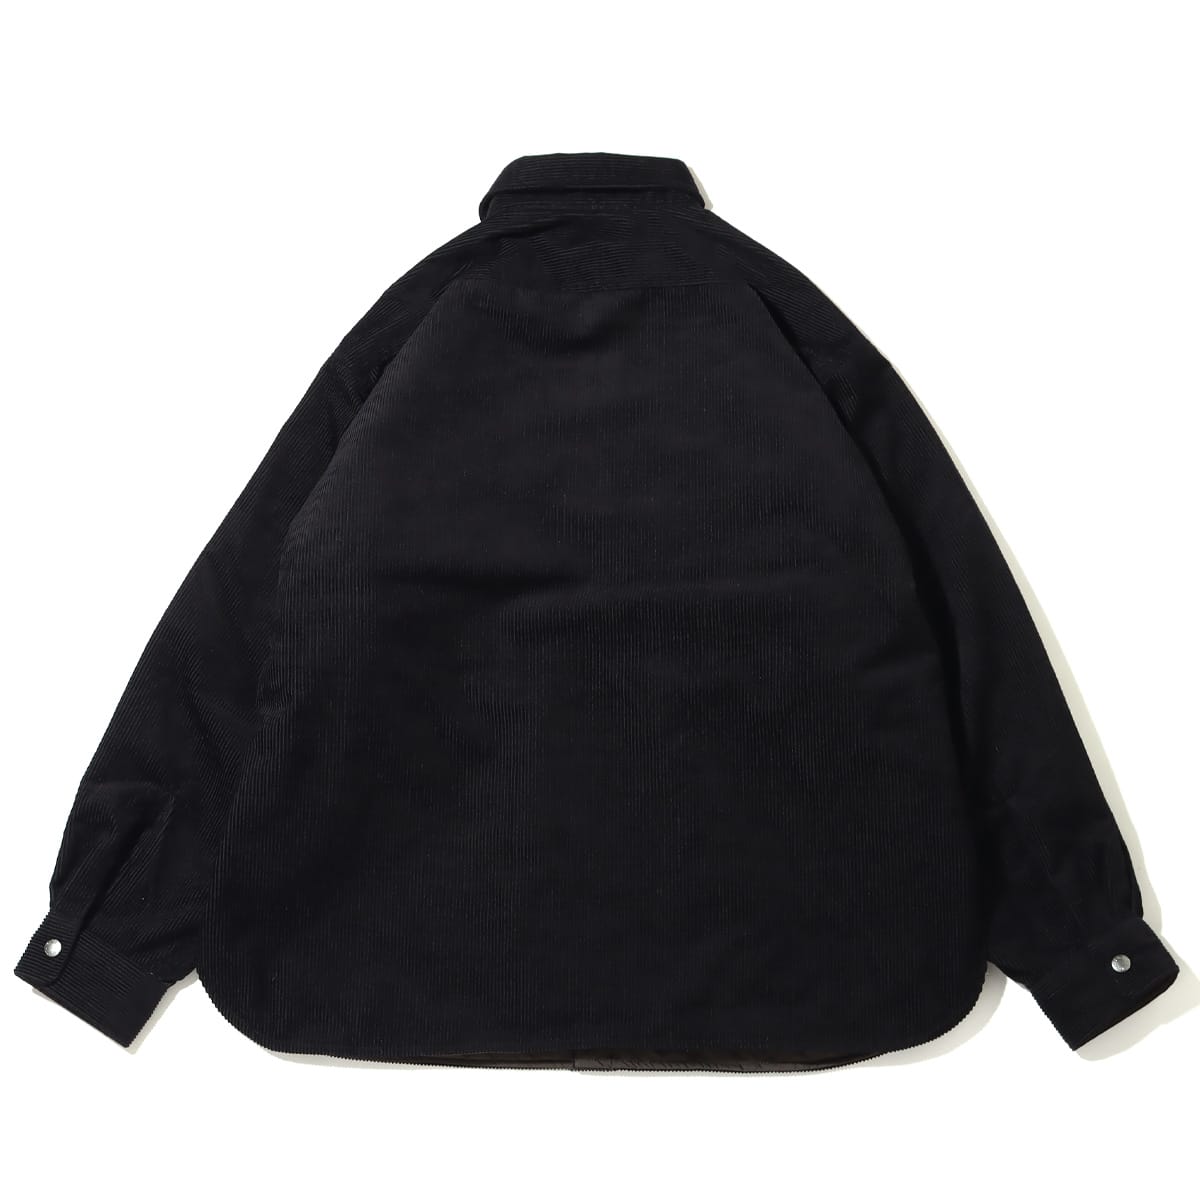 THE NORTH FACE PURPLE LABEL Corduroy Insulation Shirt Jacket Black ...